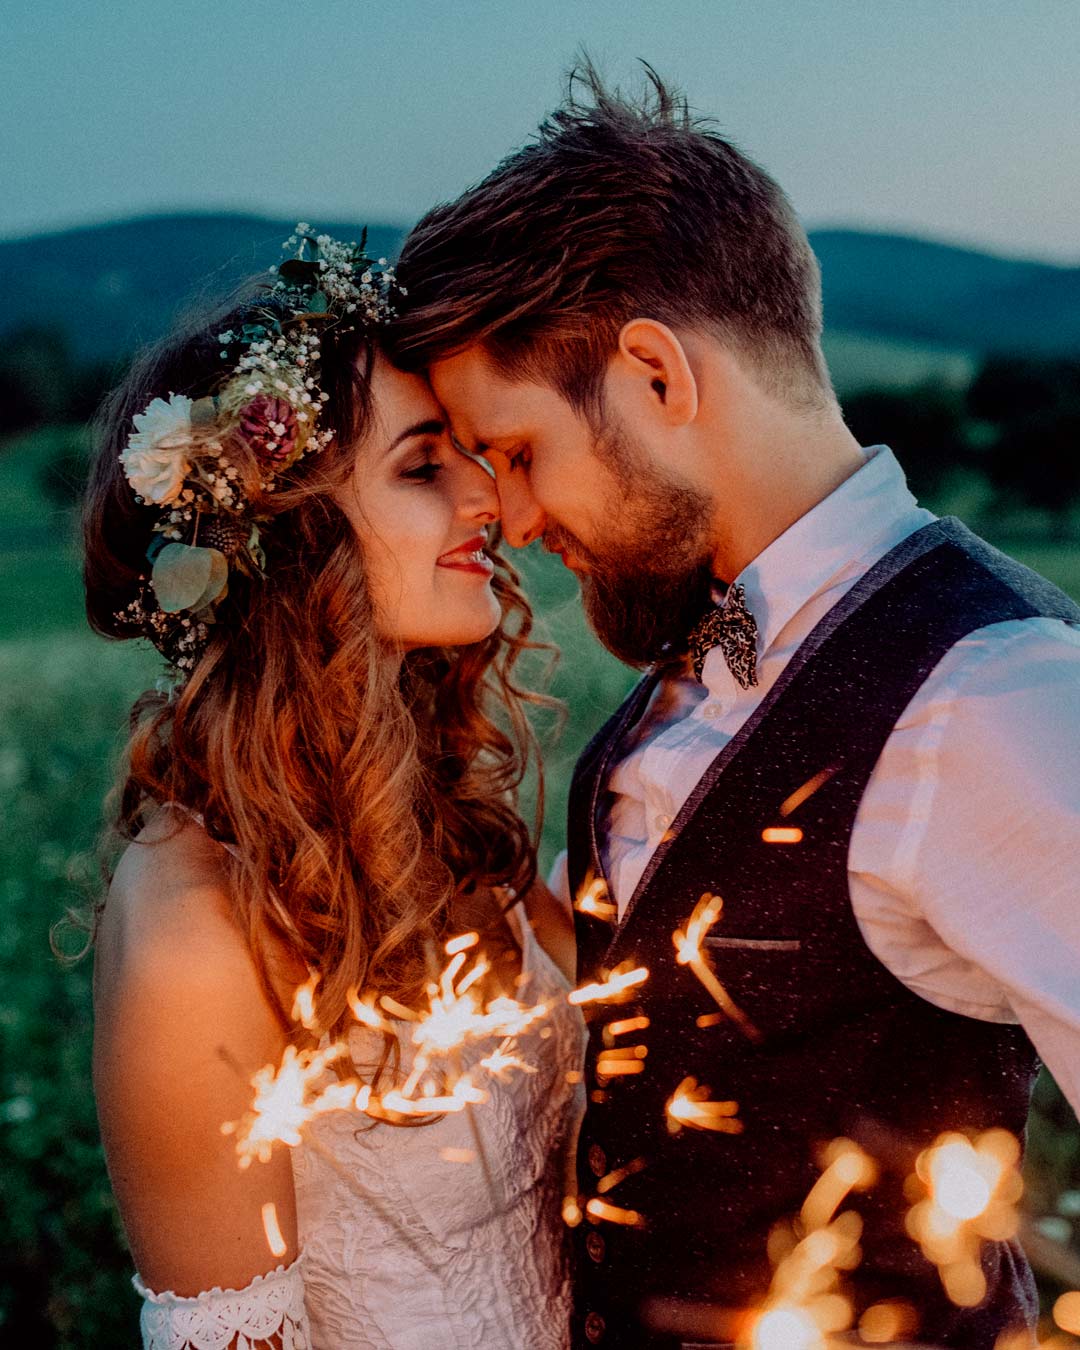 https://www.weddingforward.com/wp-content/uploads/2021/03/native-american-wedding-blessing-bride-groom-lights.jpg